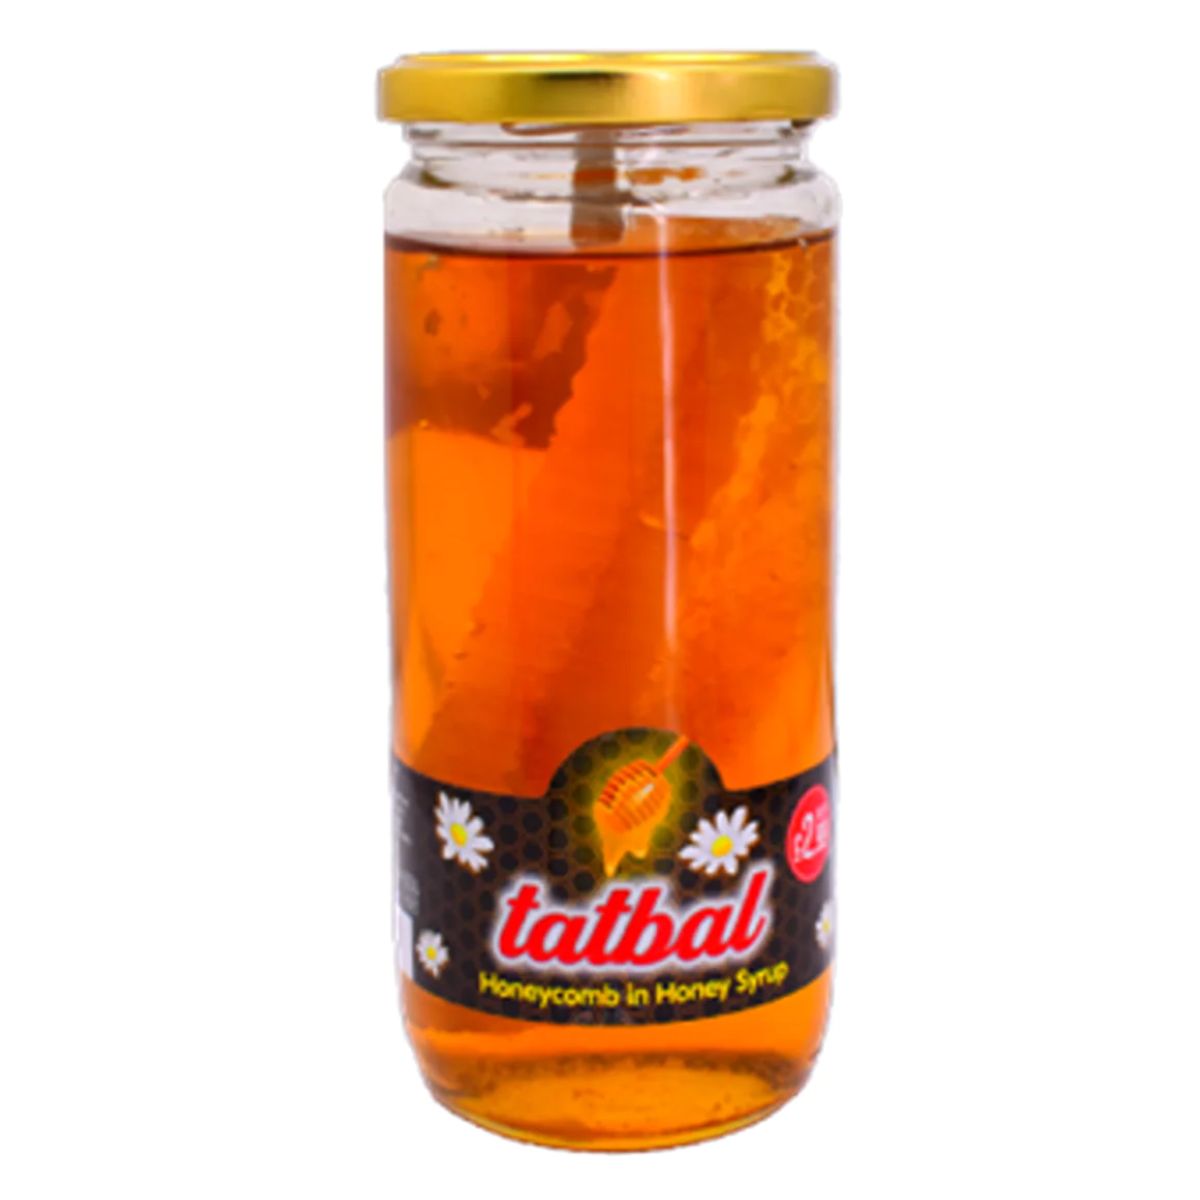 Tatbal - Honeycomb in Honey Syrup Jar - 600g